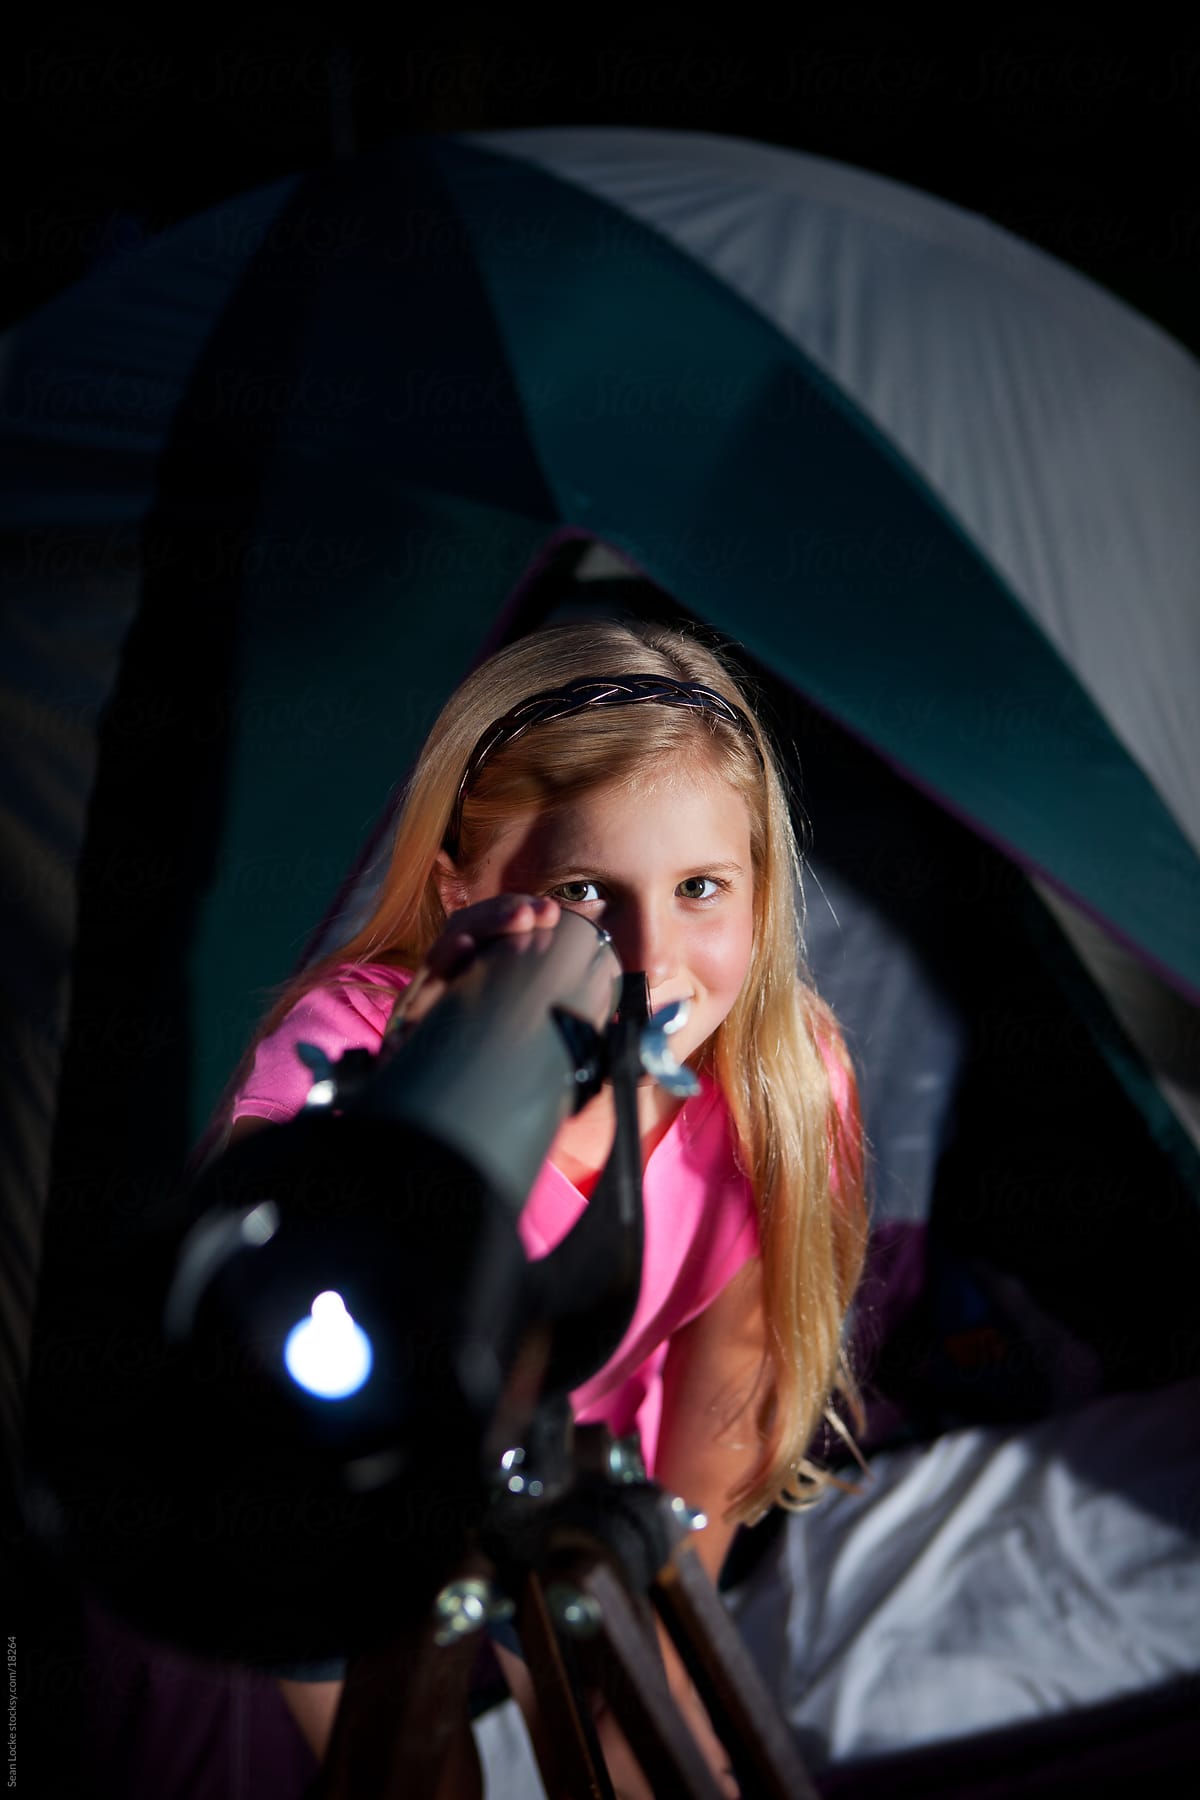 Camping: Girl Uses Telescope in Backyard